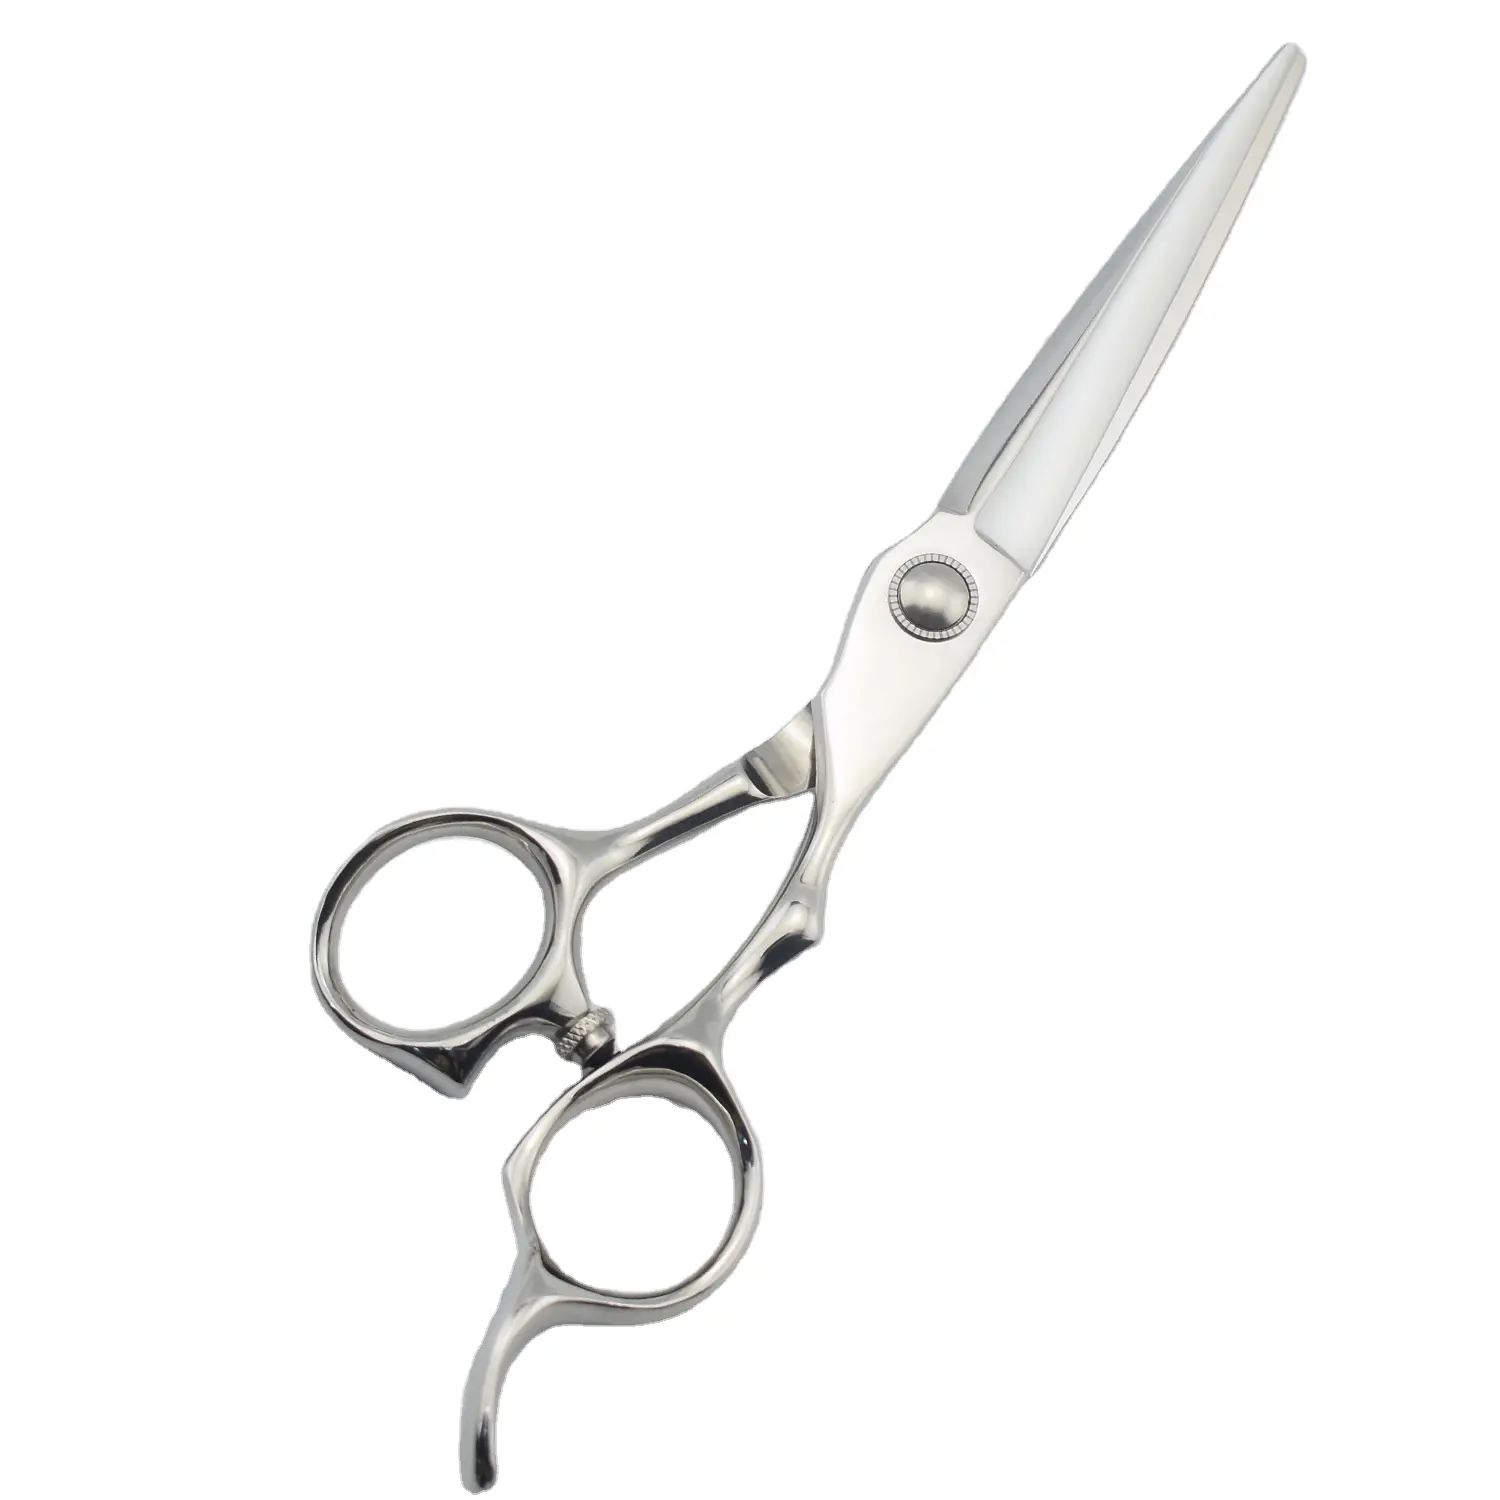 SHIMAMO 6 Inches Hairdressing Scissors Professional Hair Scissors Cut Hair Cutting Salon Barber Shears Sets